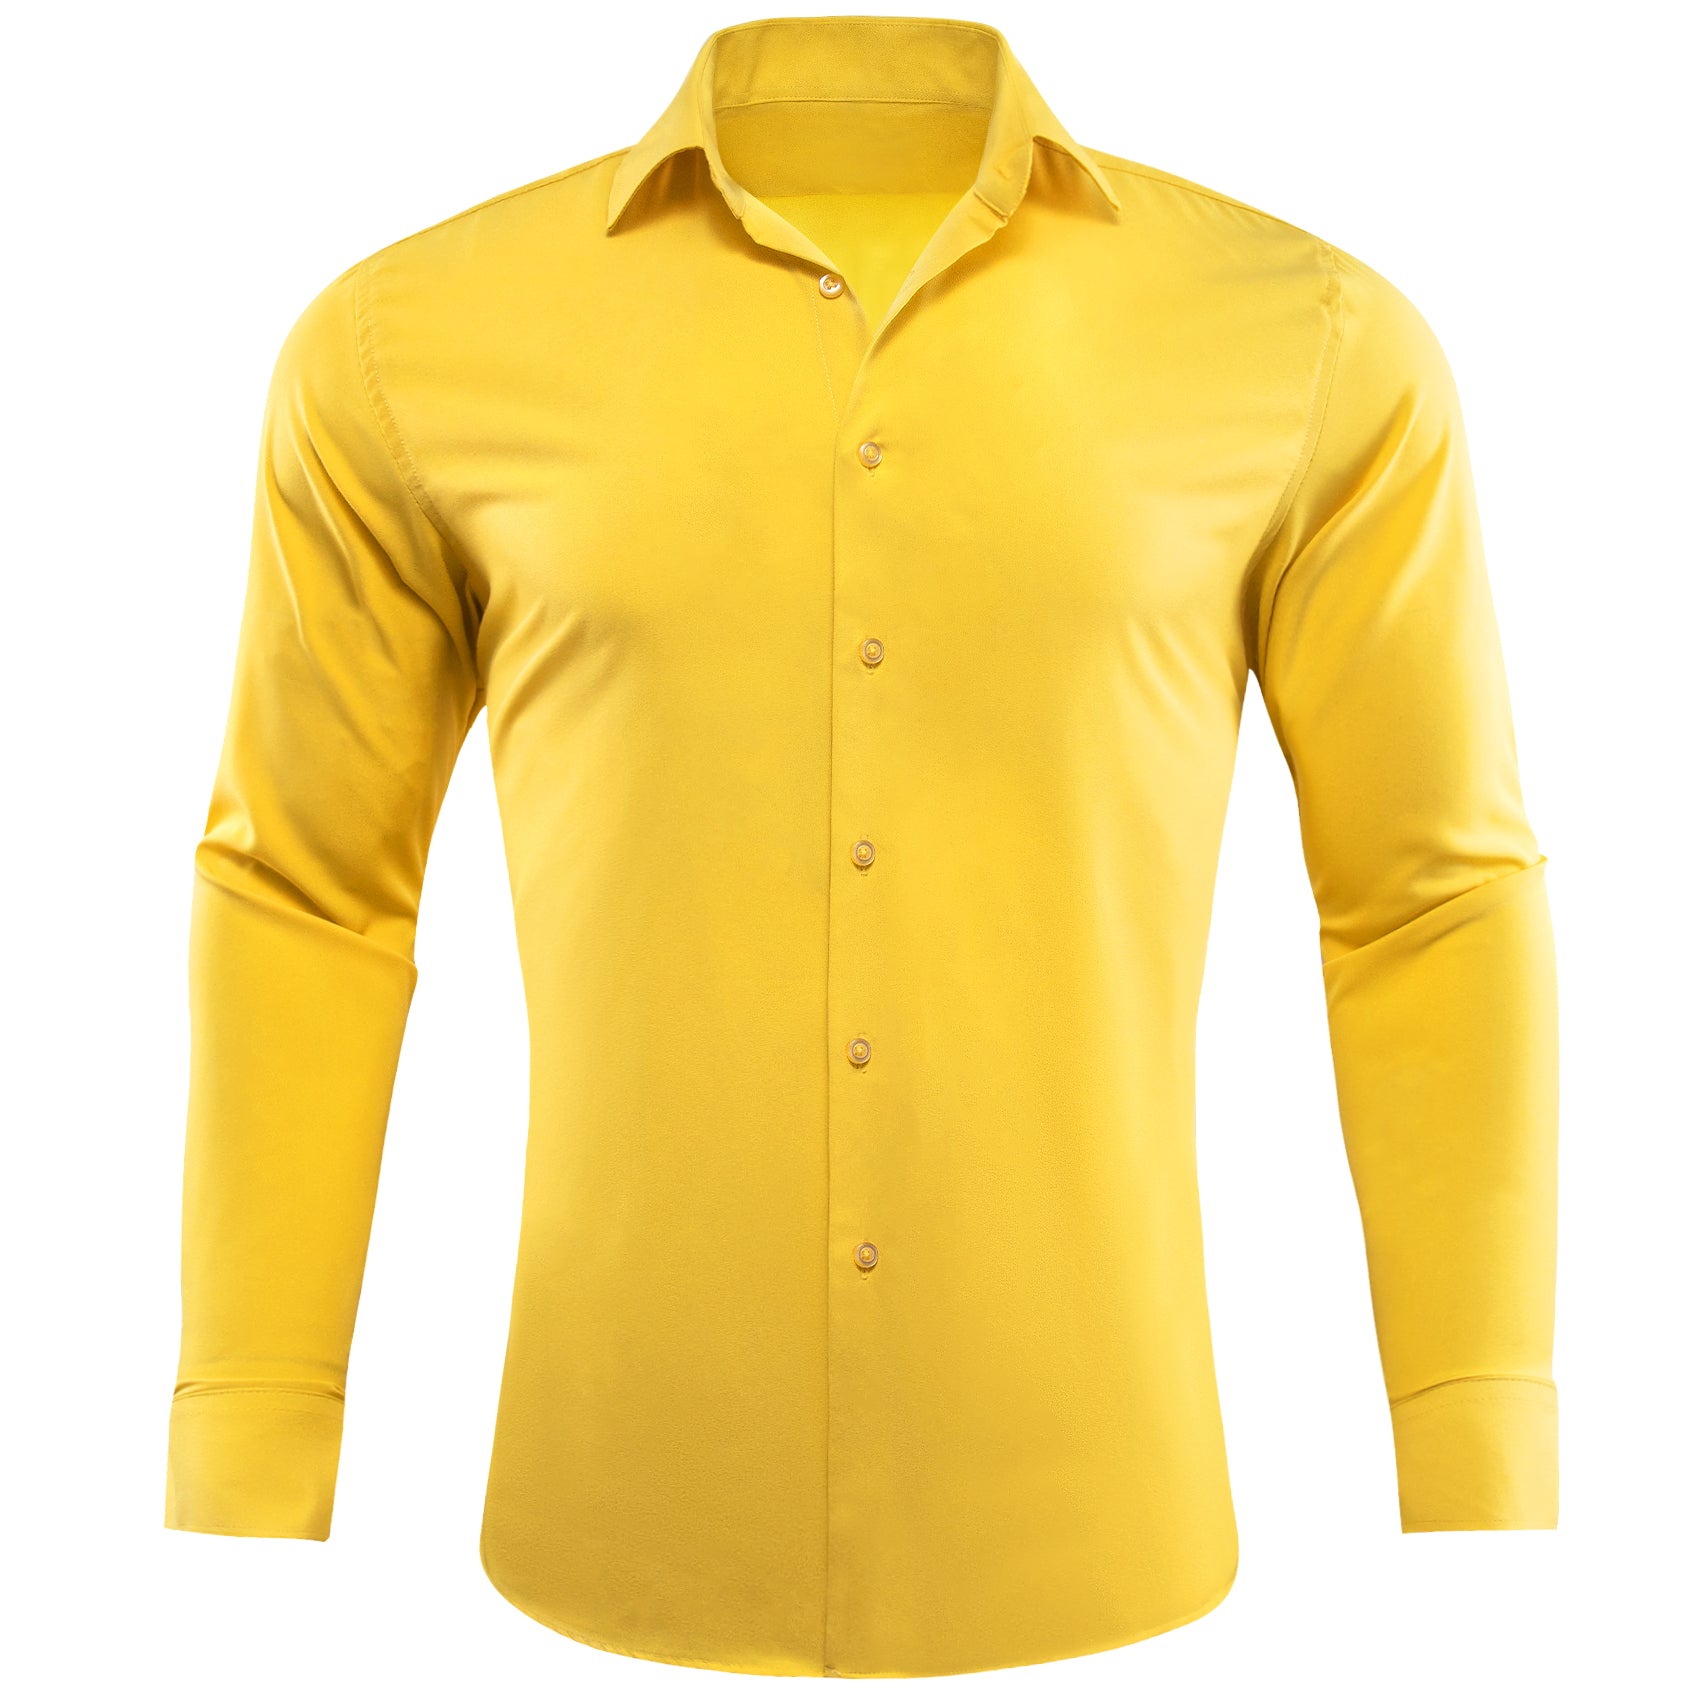 Barry.wang Bright Yellow Solid Silk Shirt